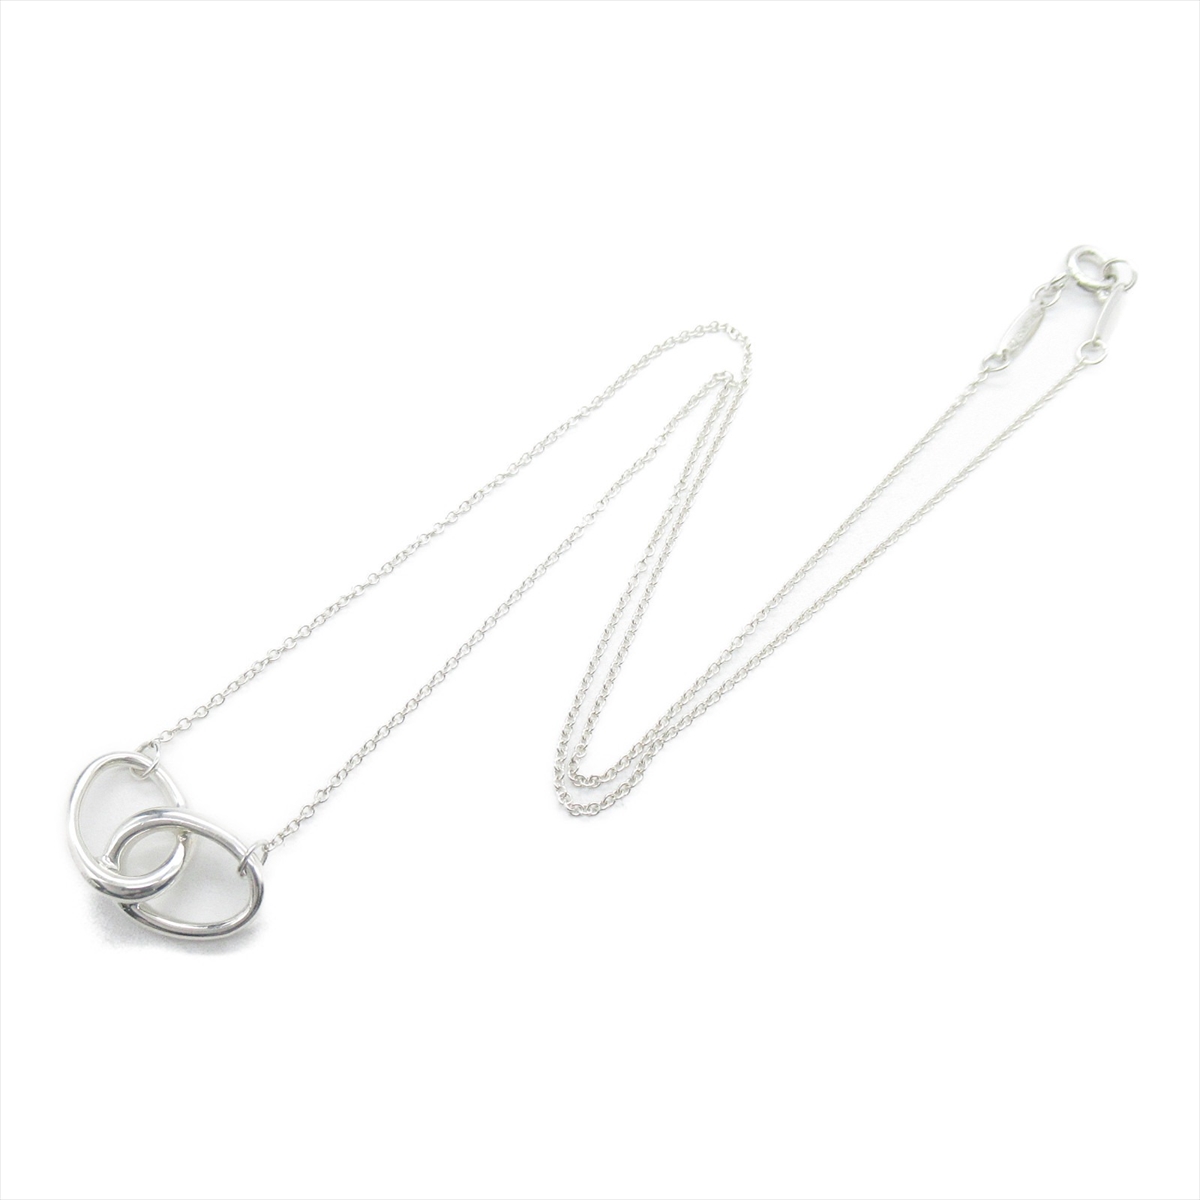 中古Tiffany & Co.蒂芙尼A级95新经典double loop necklace项链 - 图0